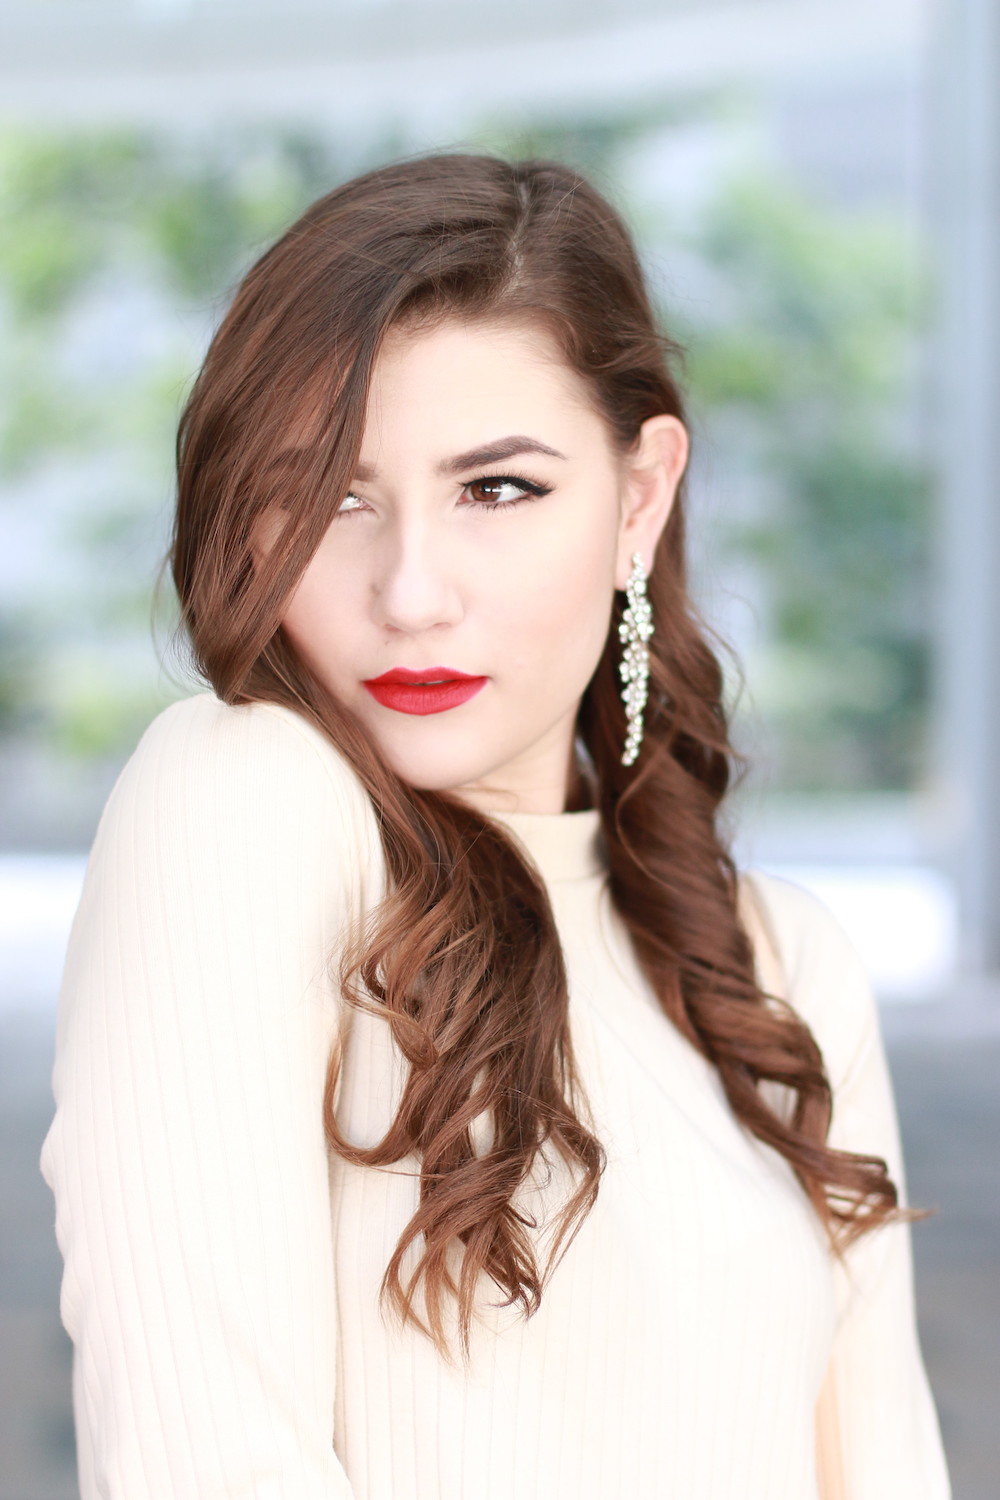 sara-bow-bloggerin-youtuberin-stuttgart-portrait-gesicht-makeup